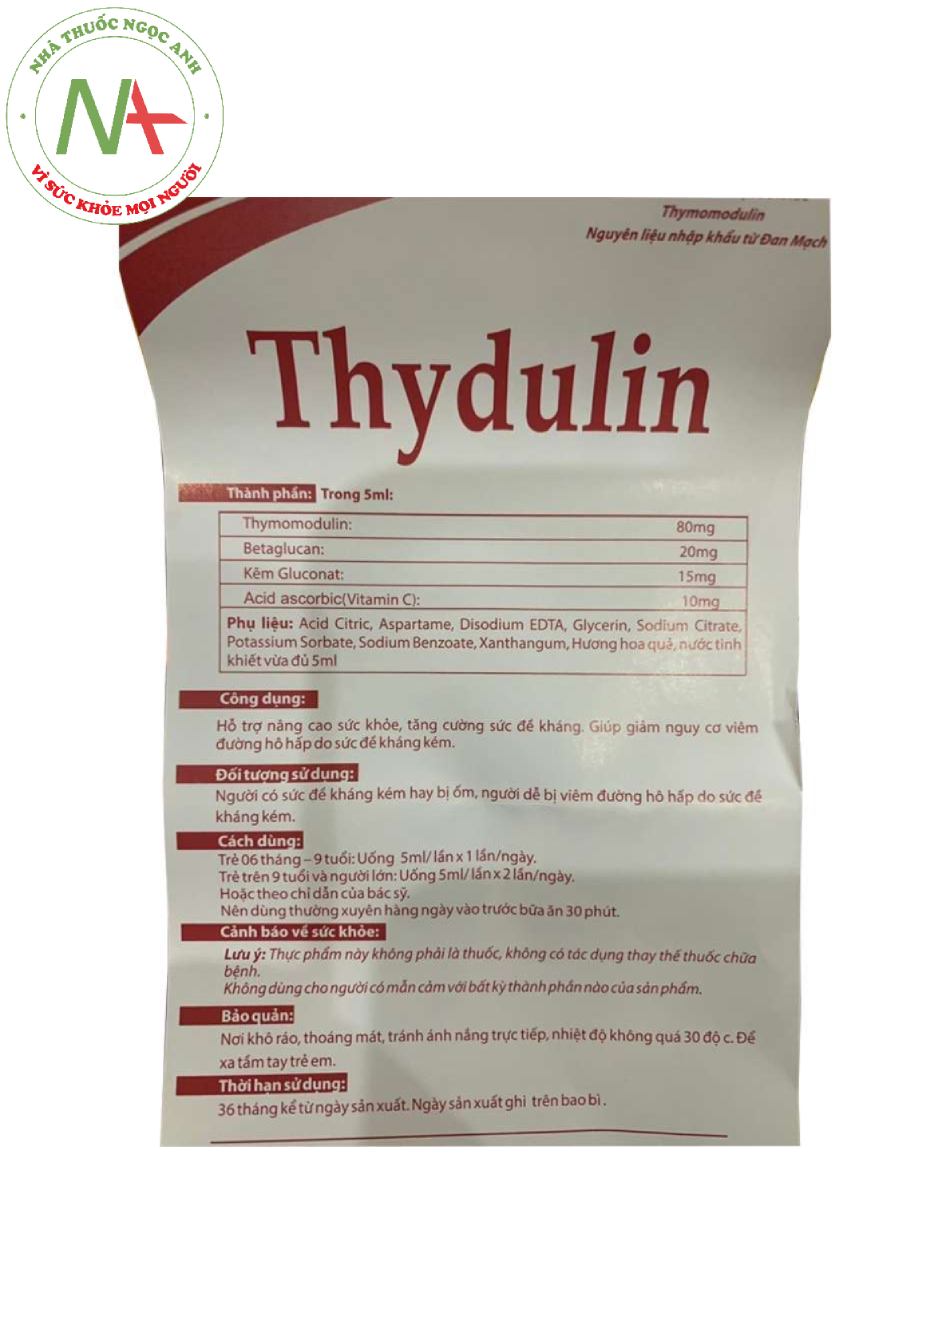 HDSD Thydulin